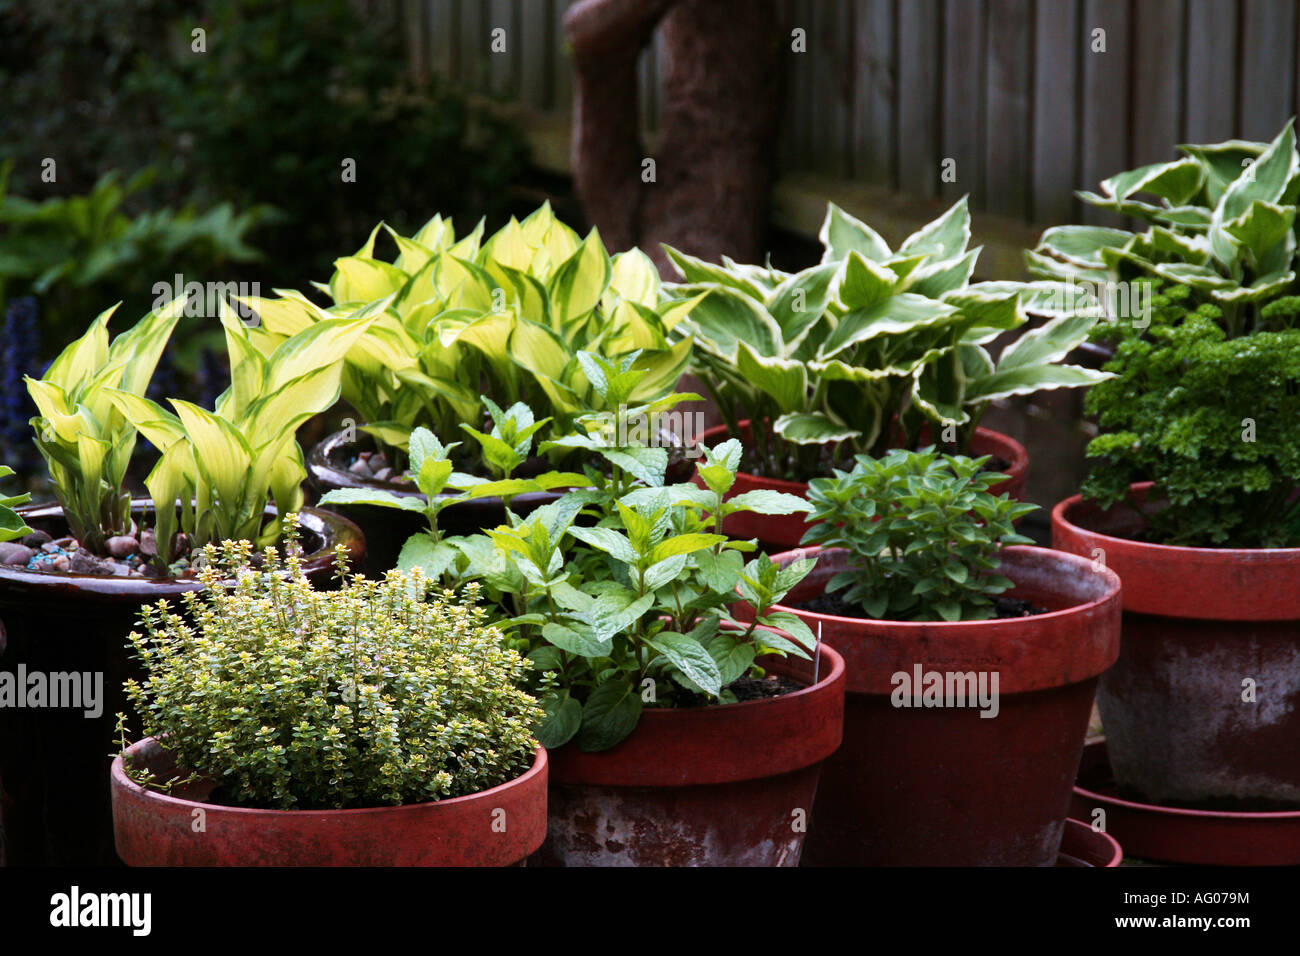 Young Hosta plants in clay garden pots Stock Photo